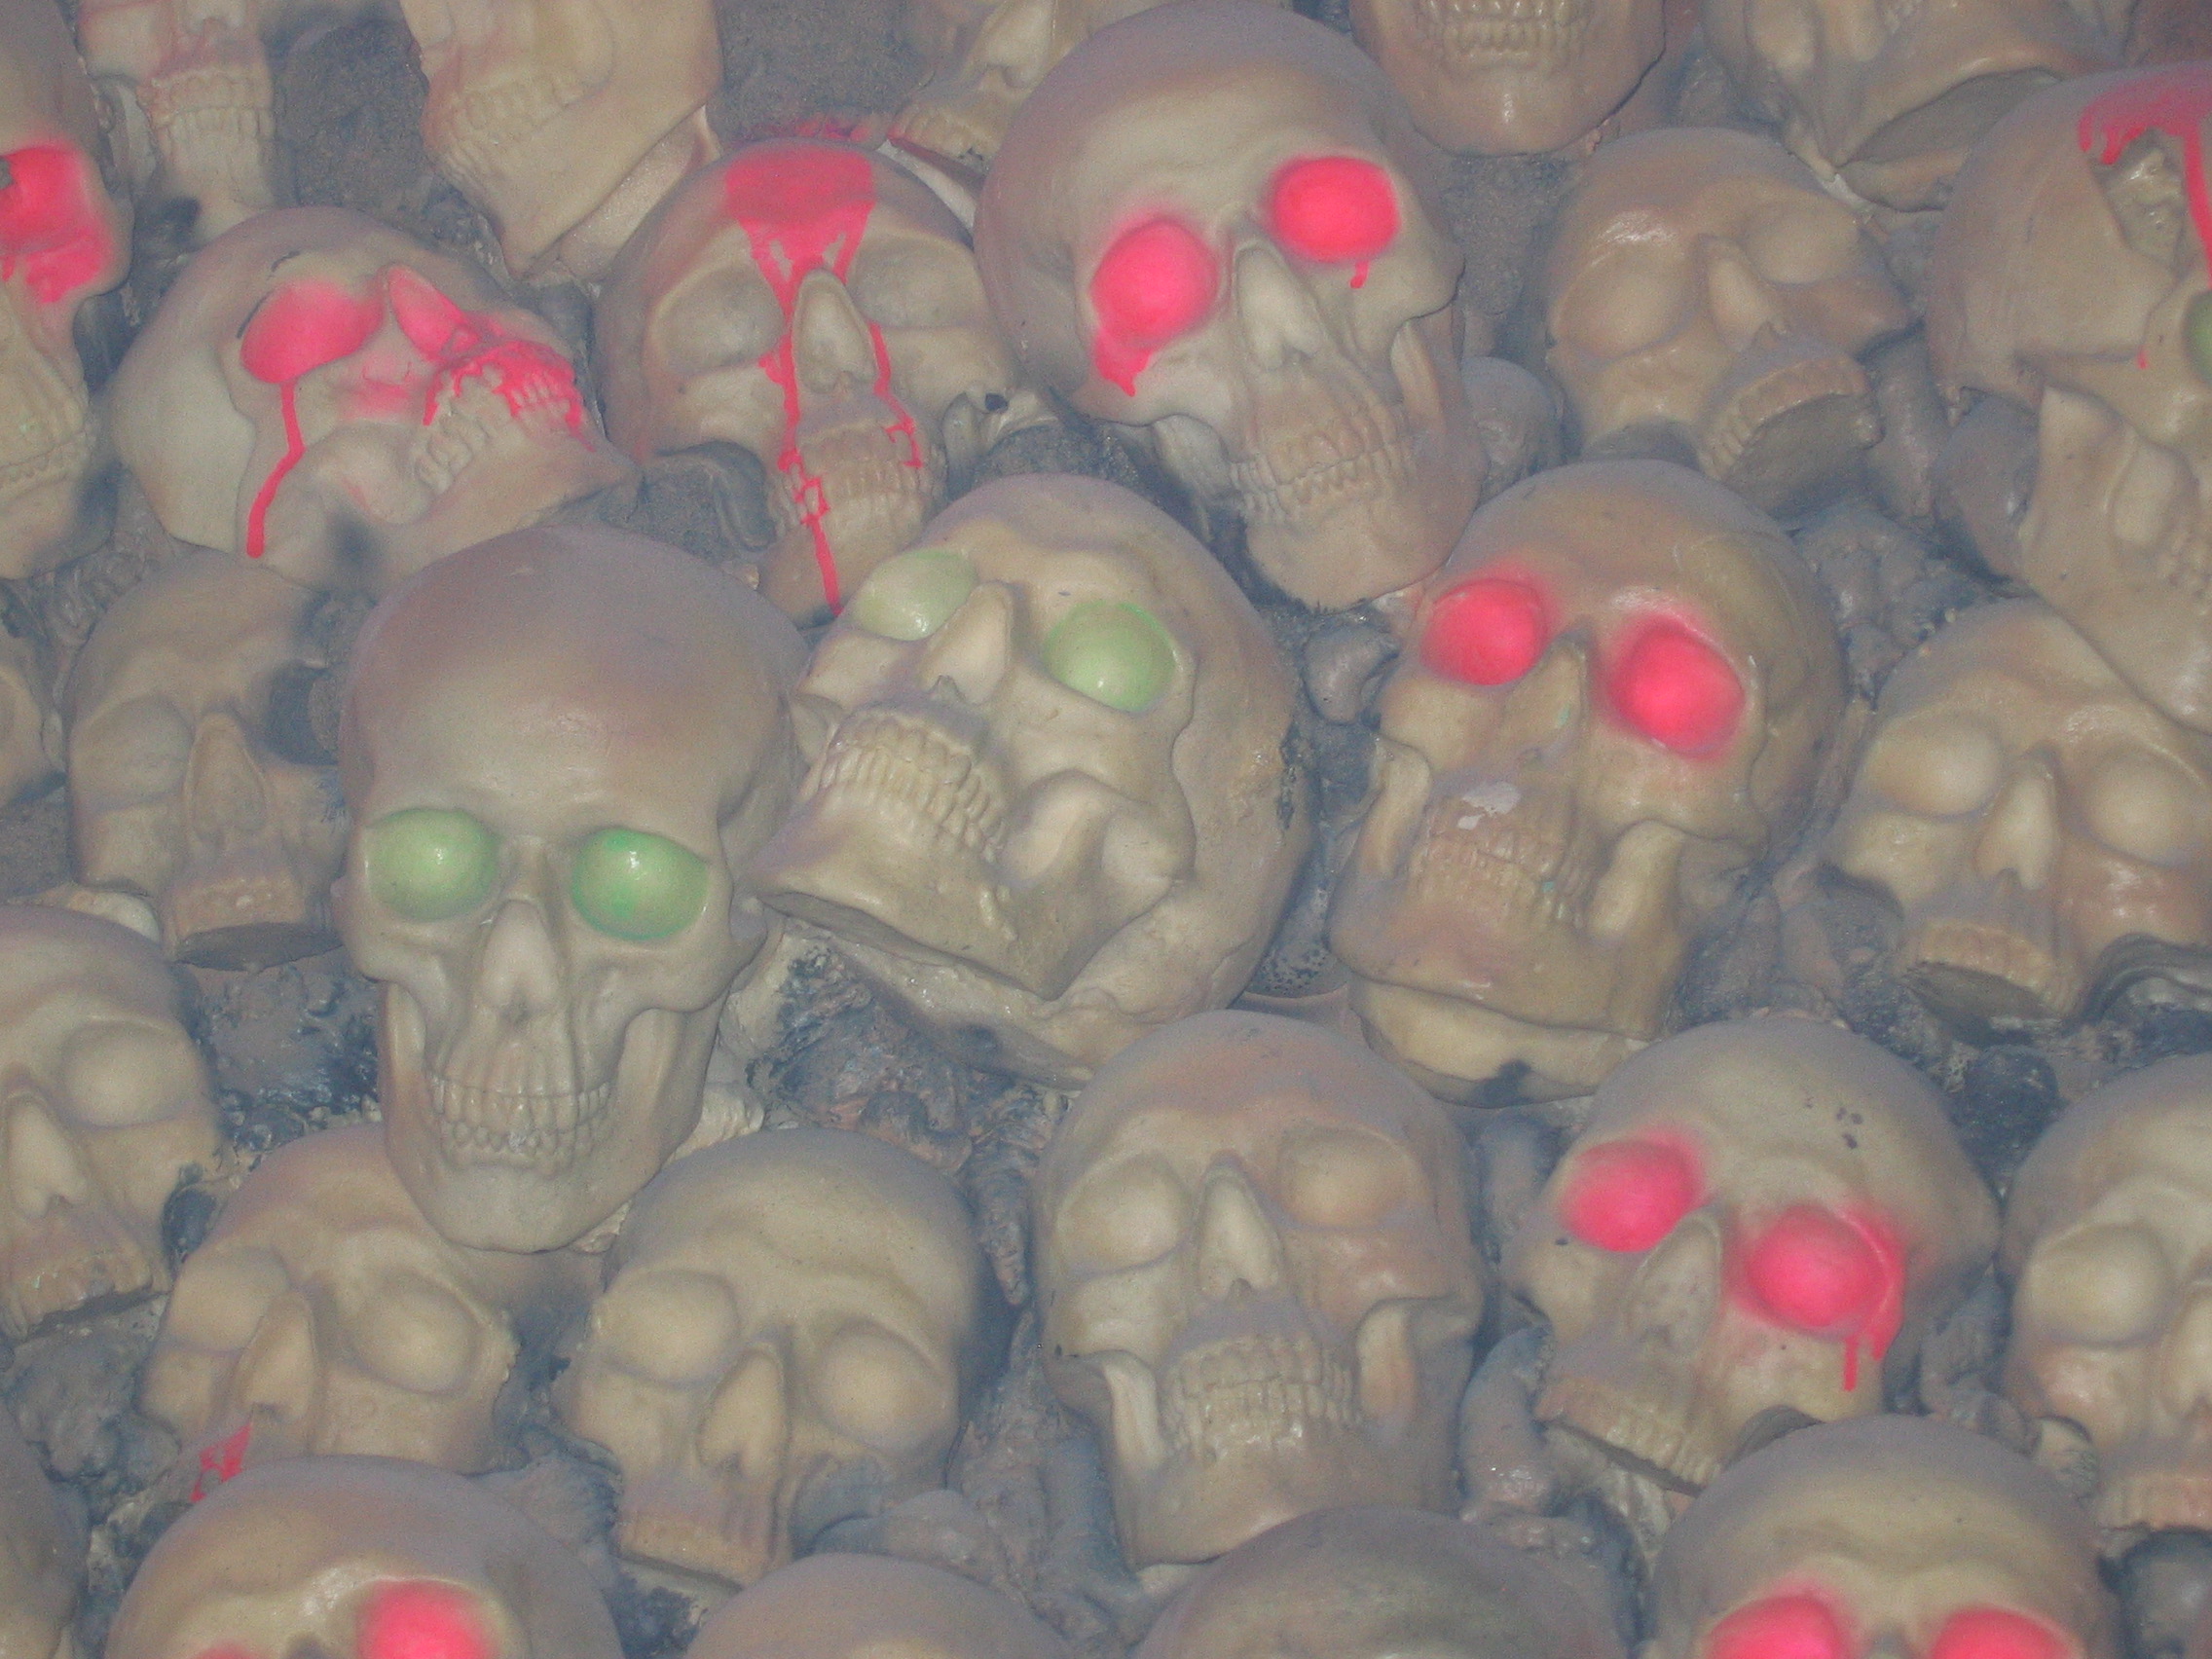 Photo taken by me - skulls at Satan&#039;s Hollow night club, Manchester 